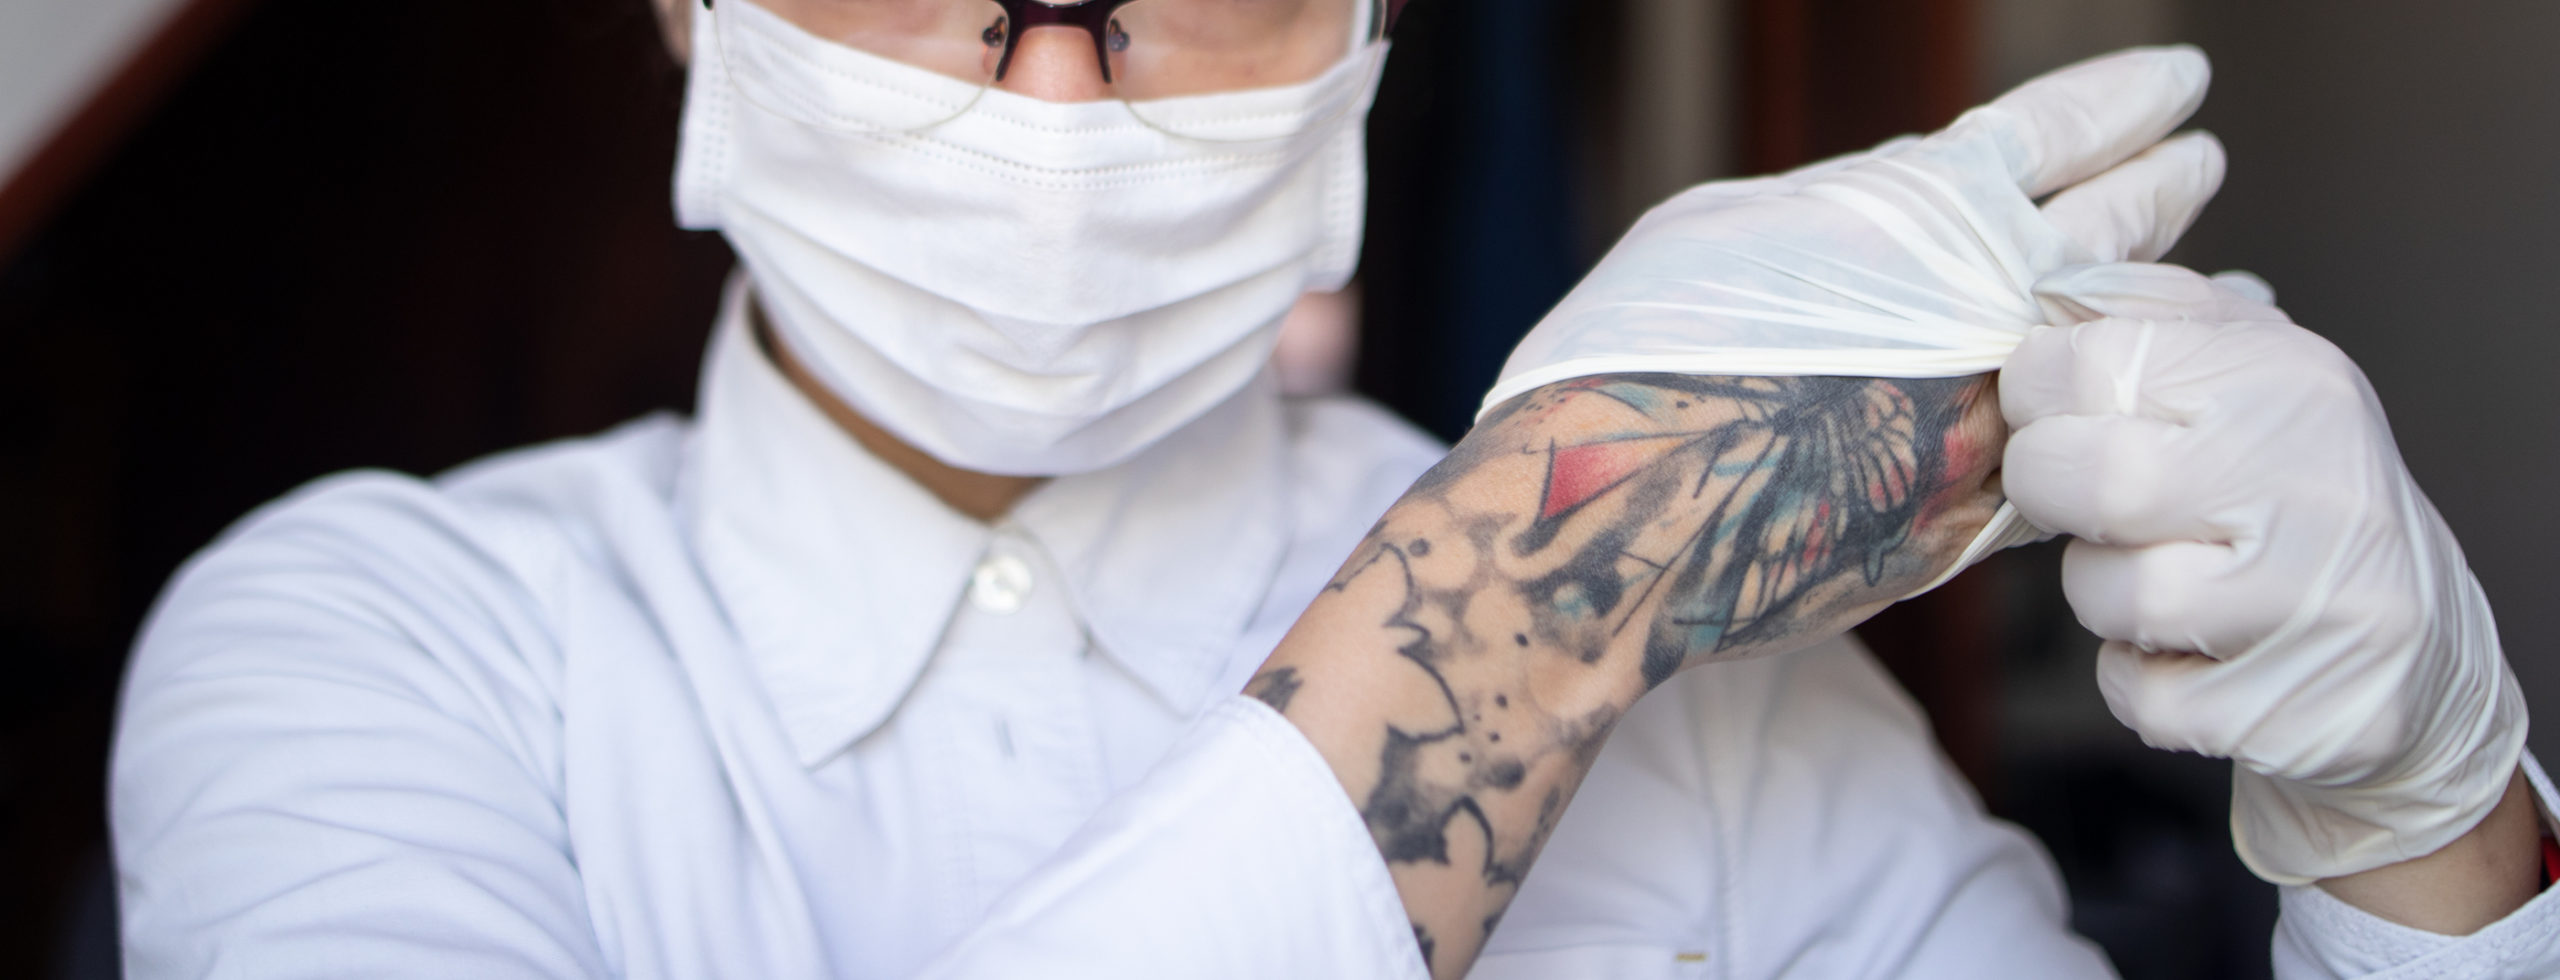 10 Ideas for Nurse Tattoos